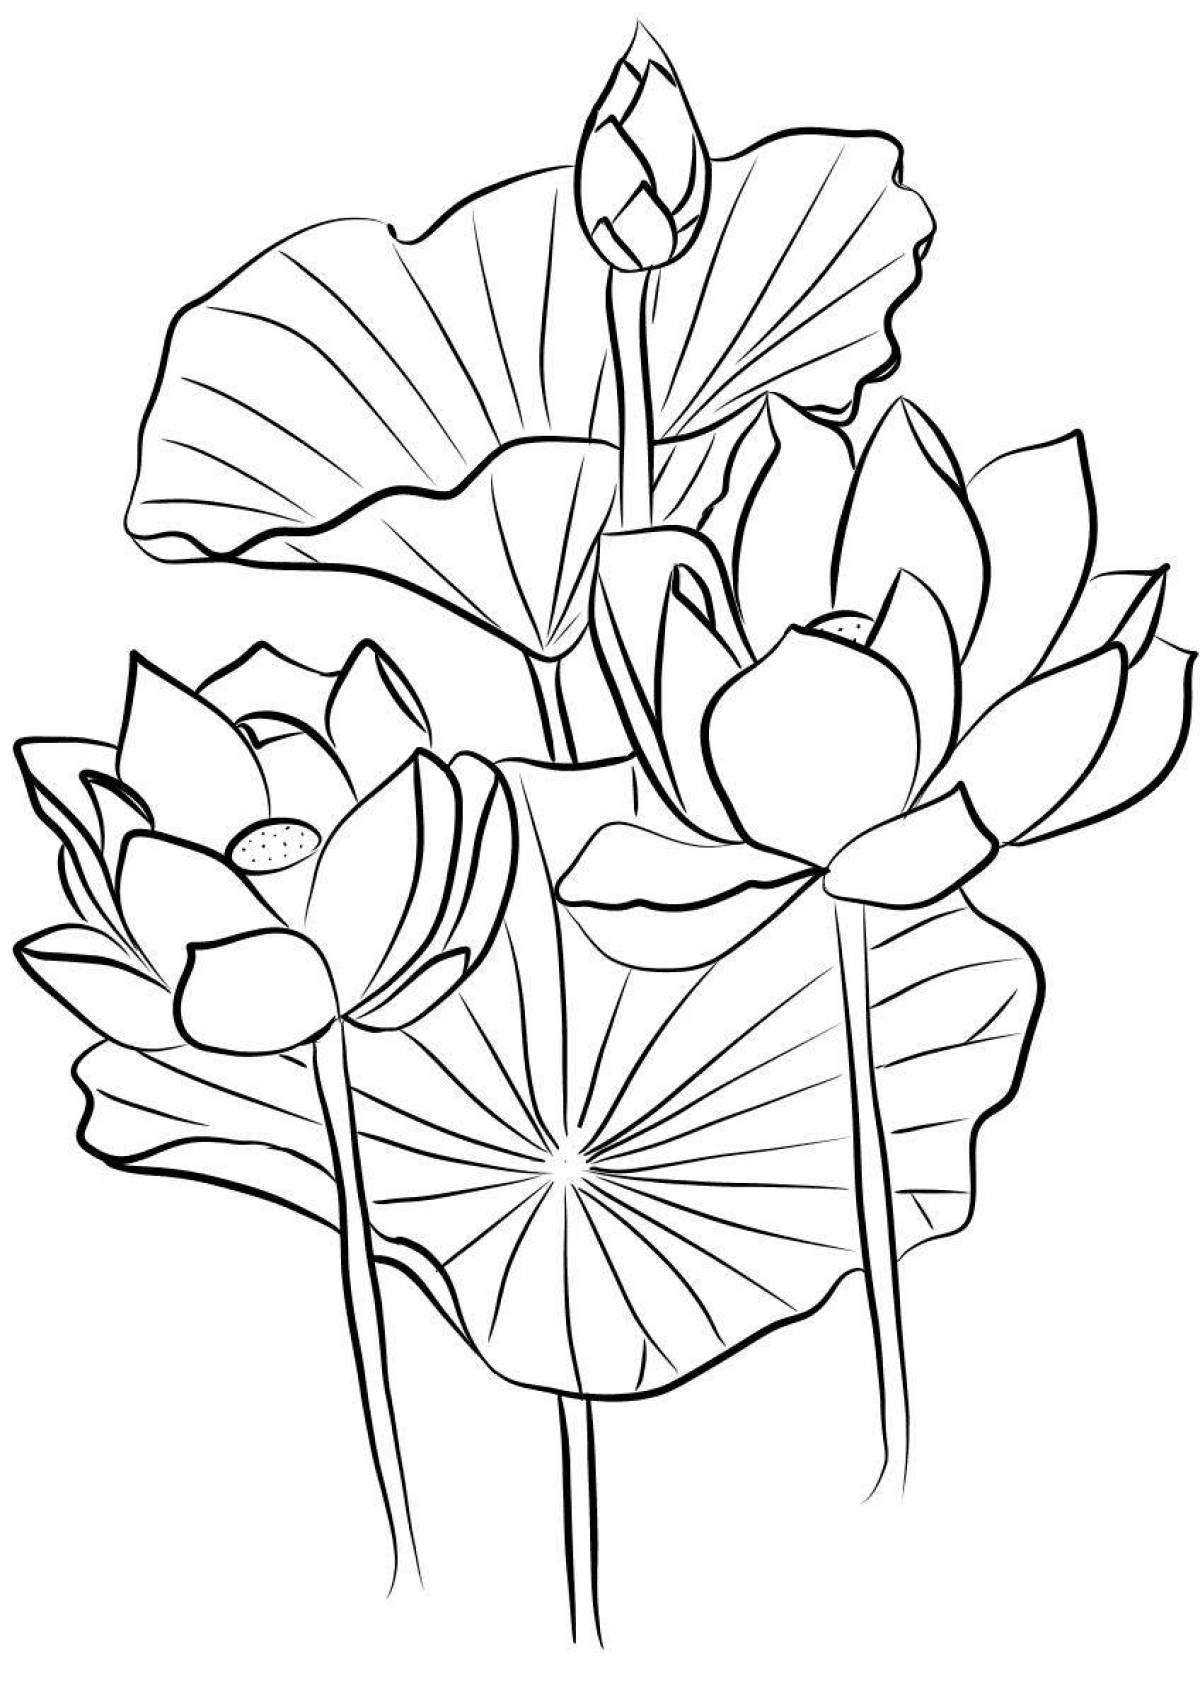 Adorable lotus coloring page